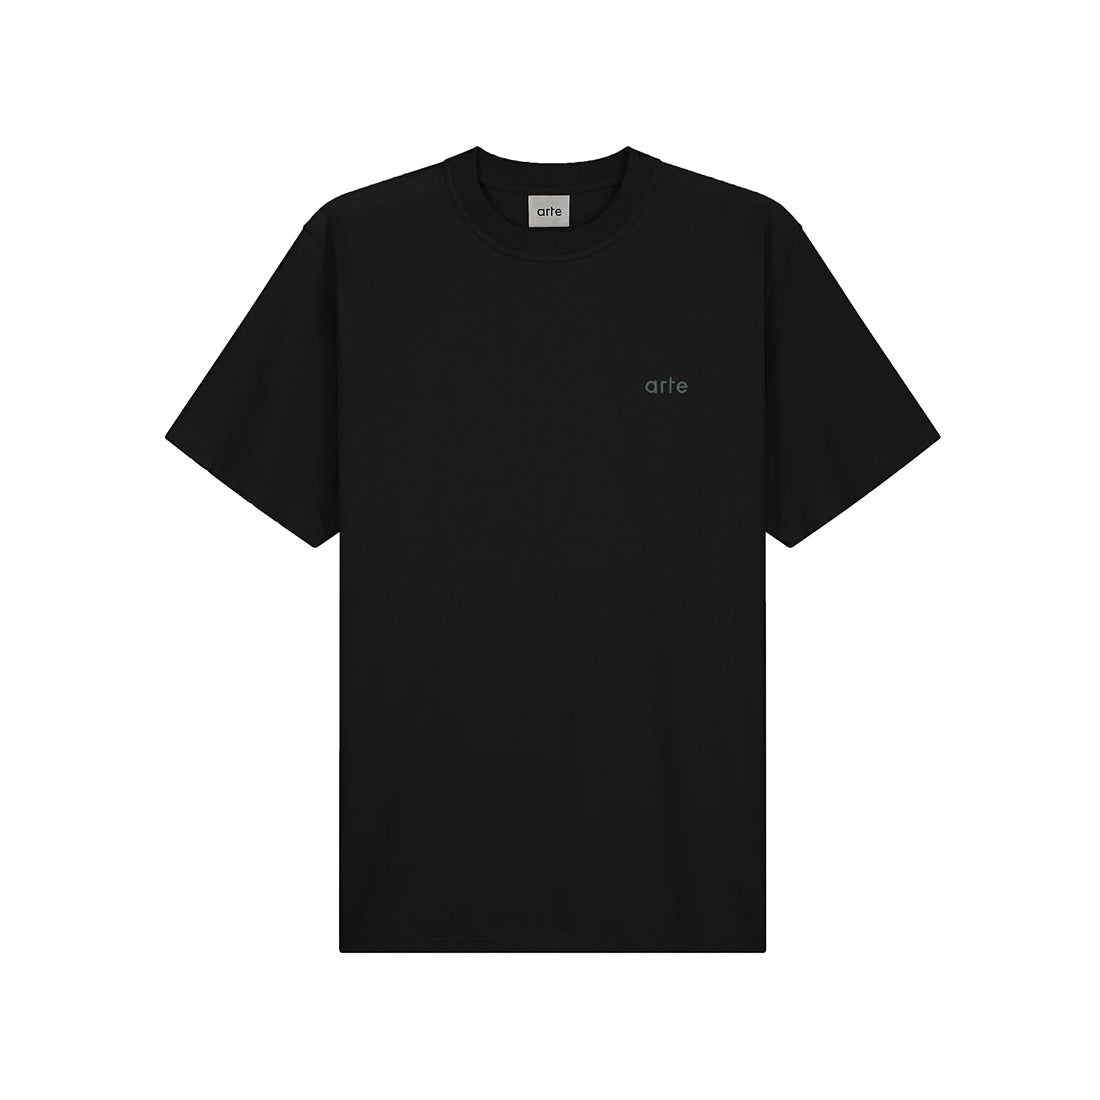 Teo Back Rings T-Shirt - Black